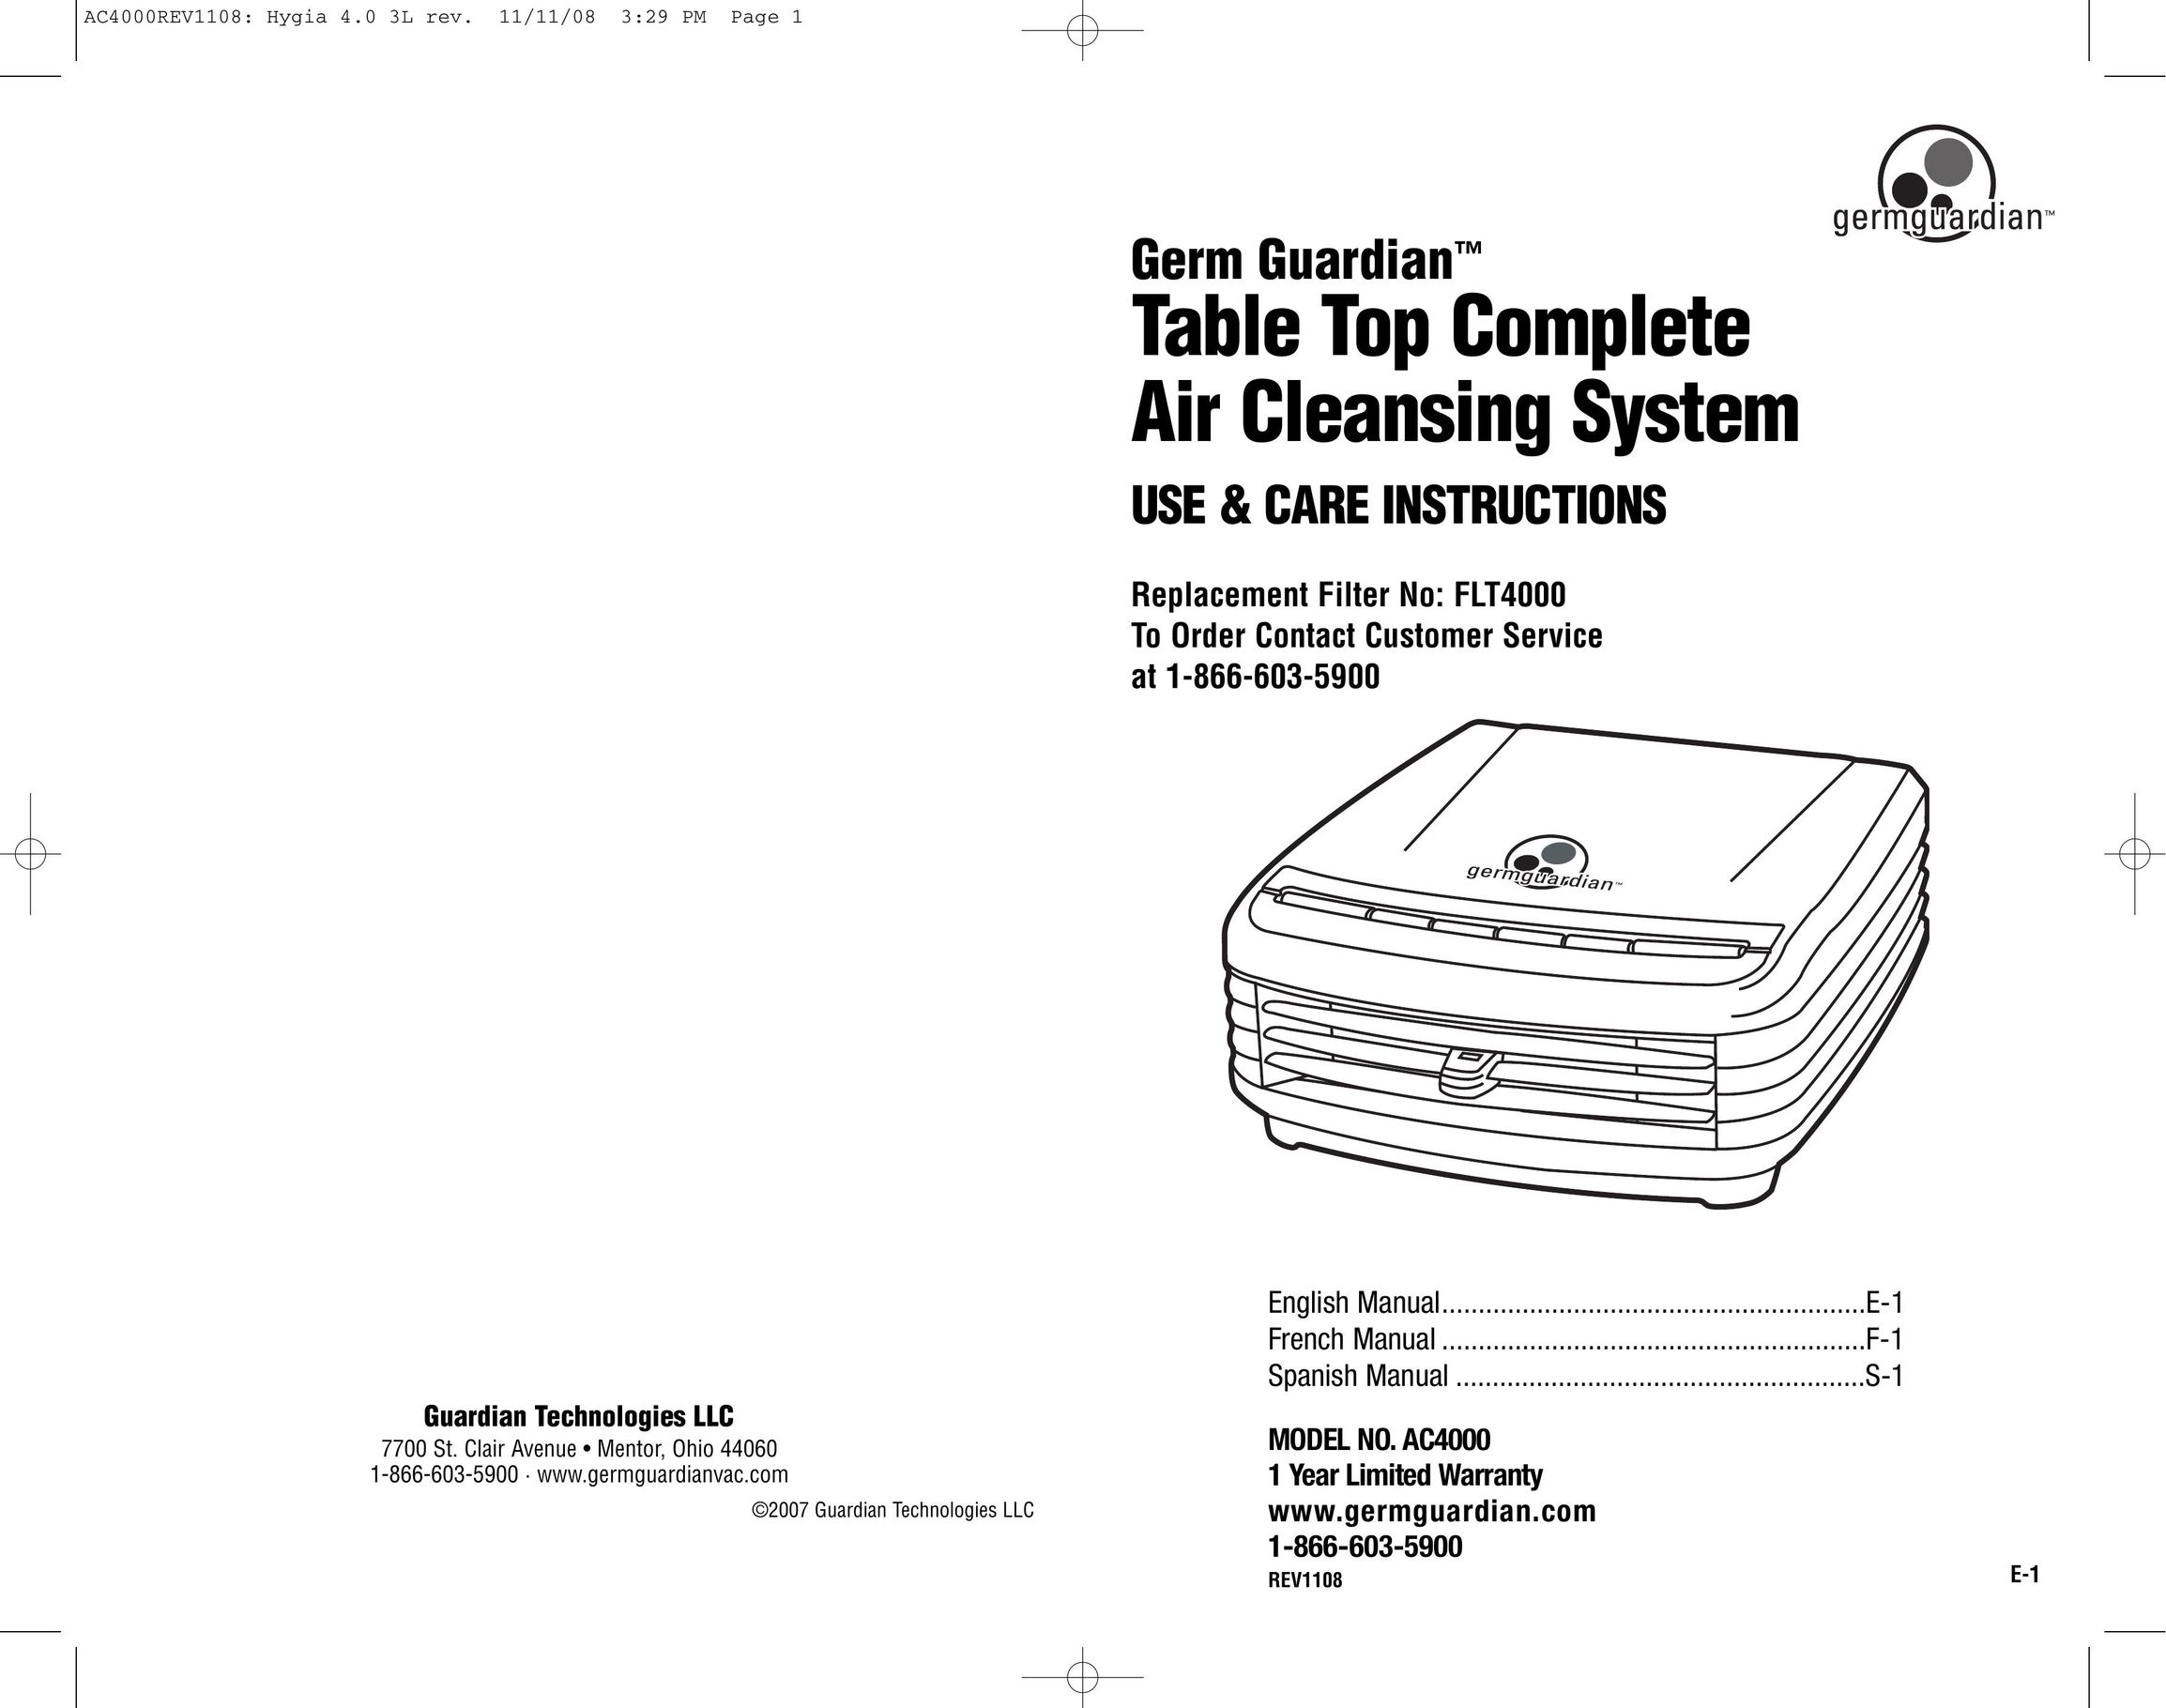 Guardian Technologies AC4000 Air Cleaner User Manual